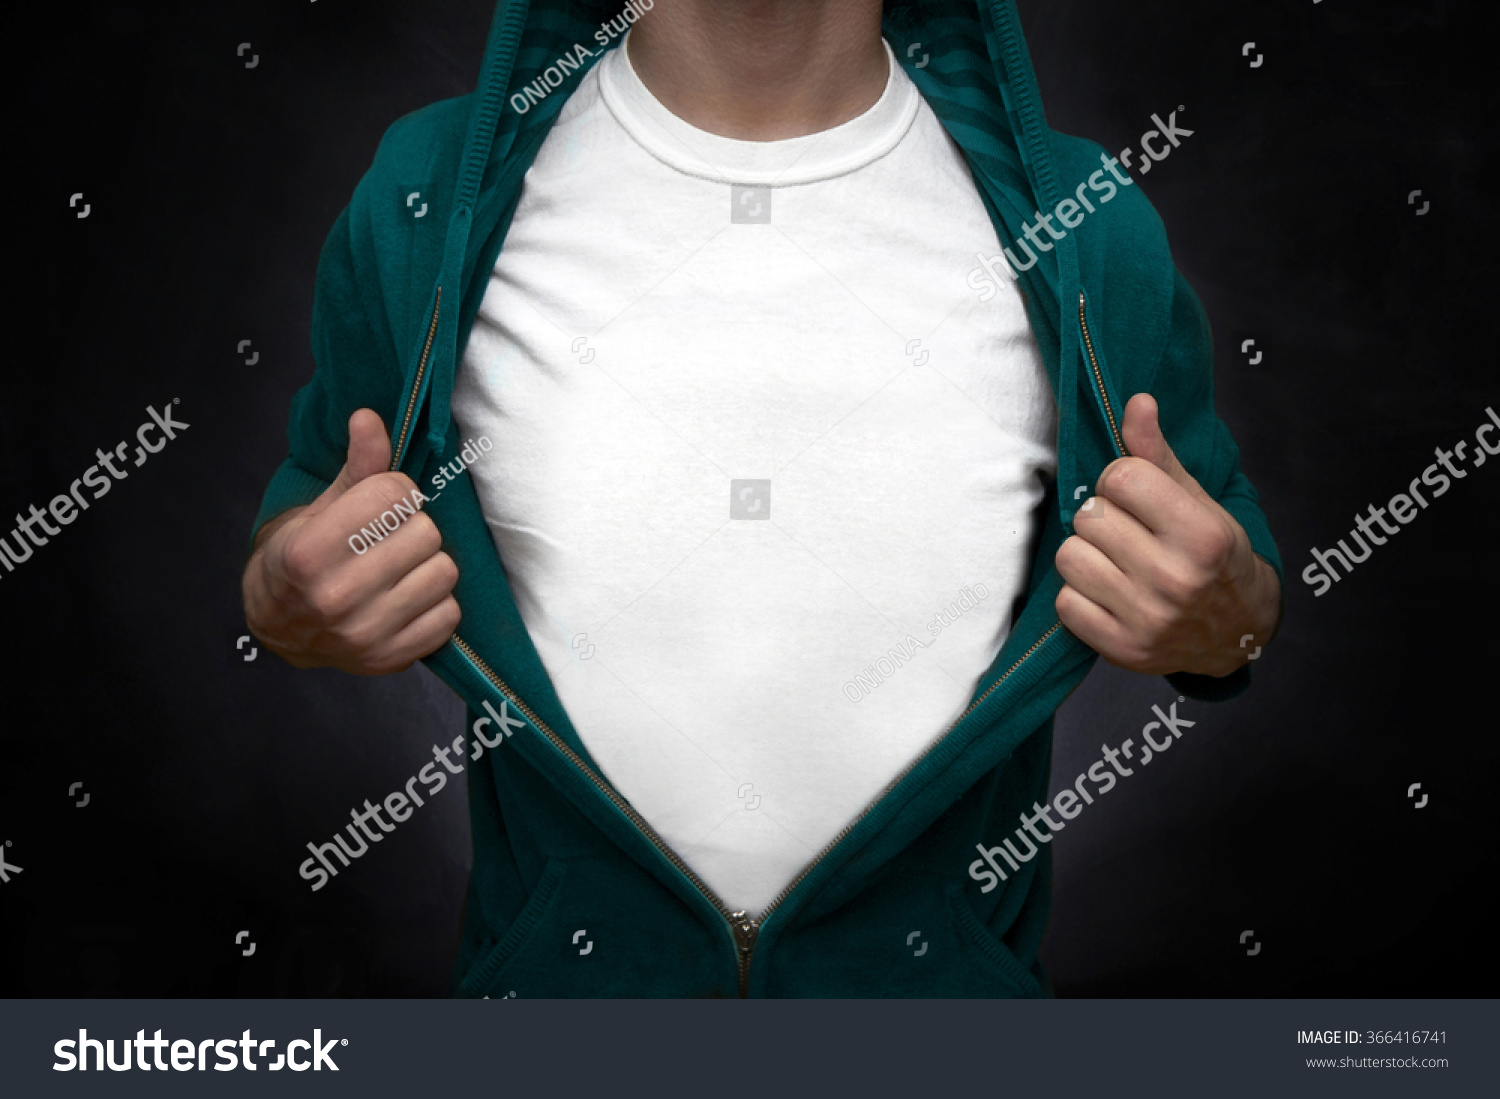 Hero pulling open turquoise blouse showing white t-shirt on blackboard background #366416741